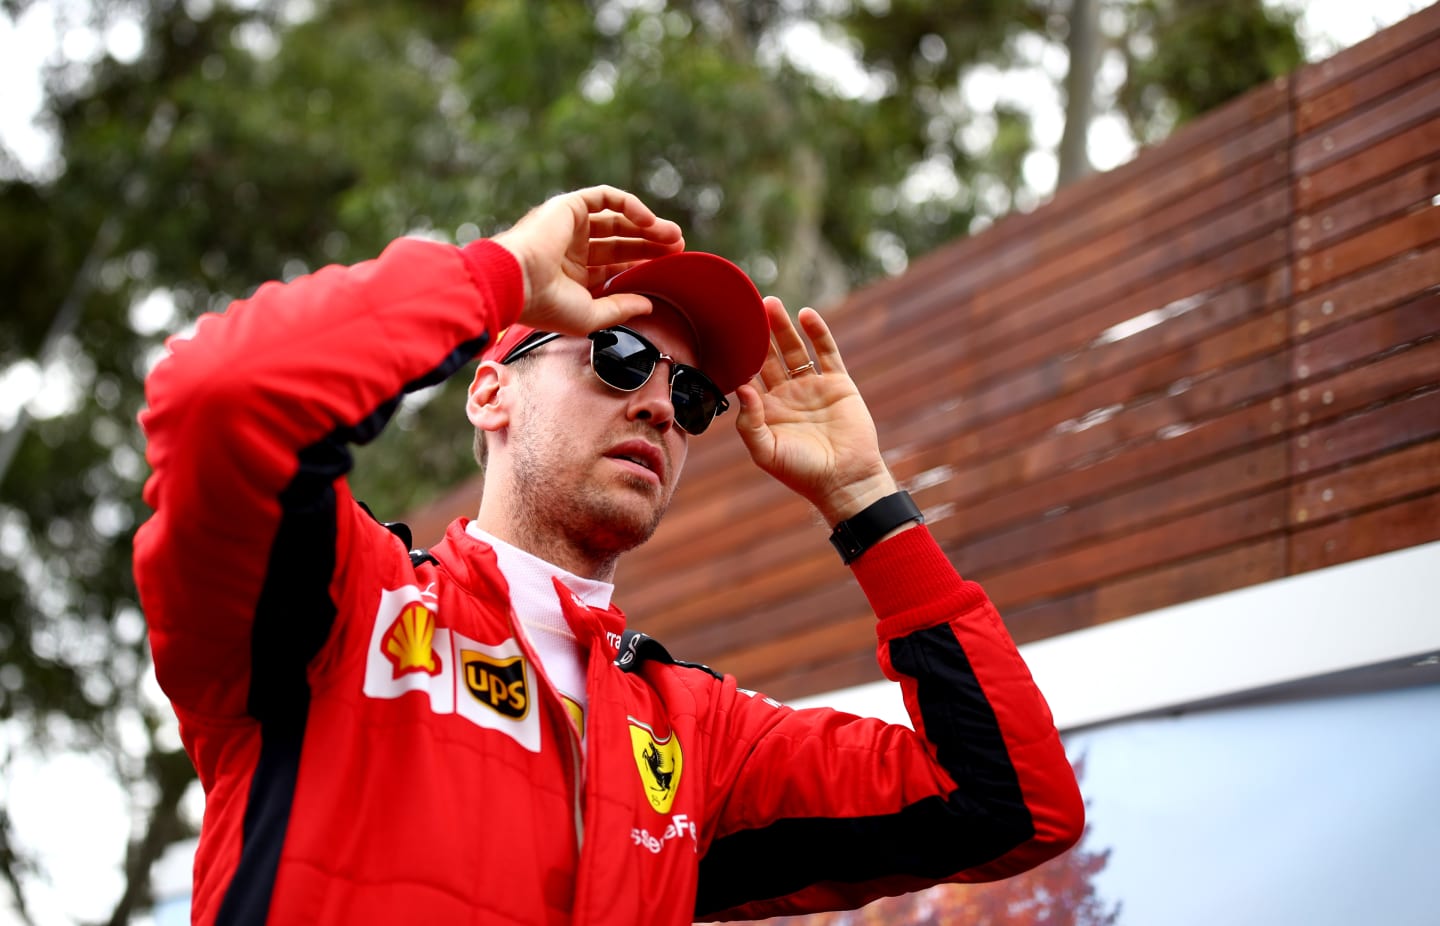 MELBOURNE, AUSTRALIA - MARCH 12: Sebastian Vettel of Germany and Ferrari looks on in the Paddock